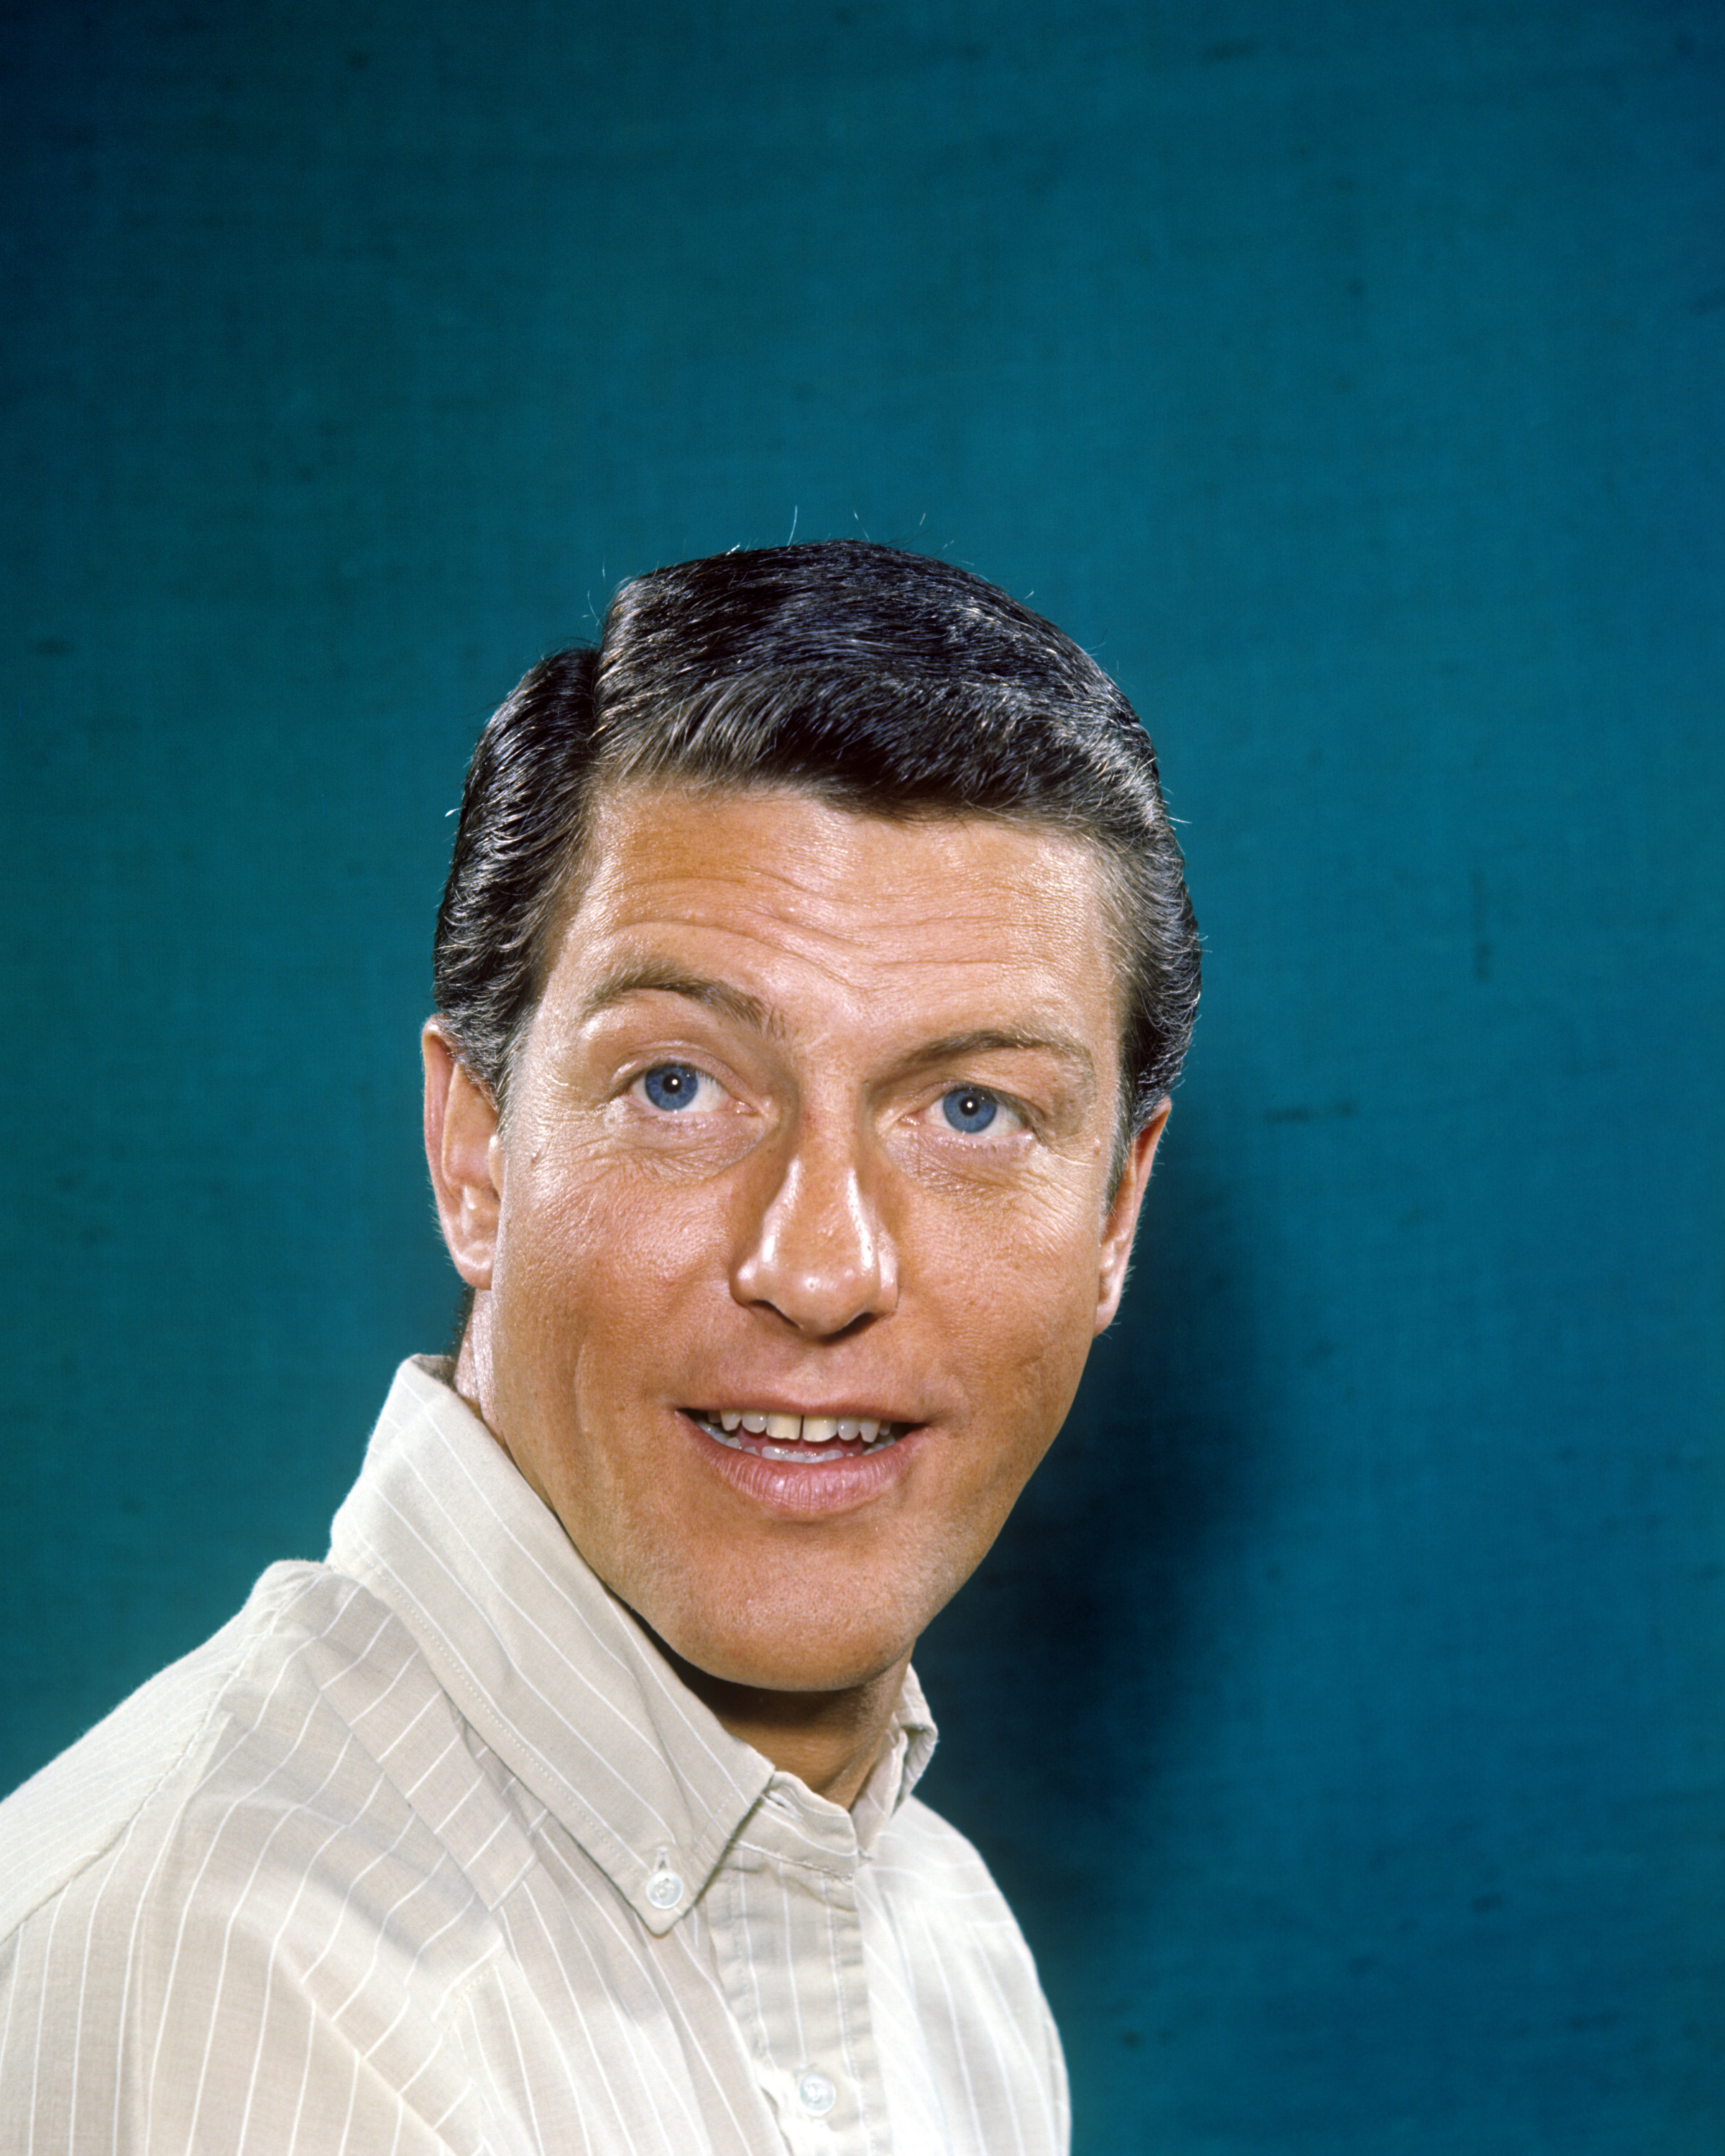 Dick Van Dyke, circa 1965 | Source: Getty Images